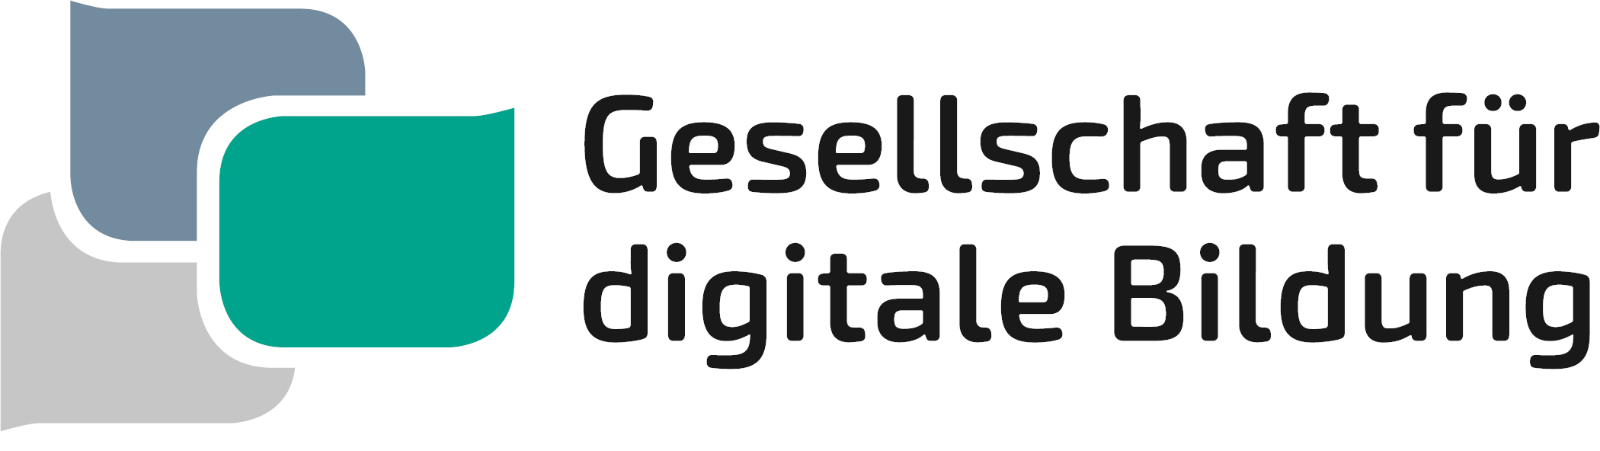 Gesellschaft für digitale Bildung (GfdB)